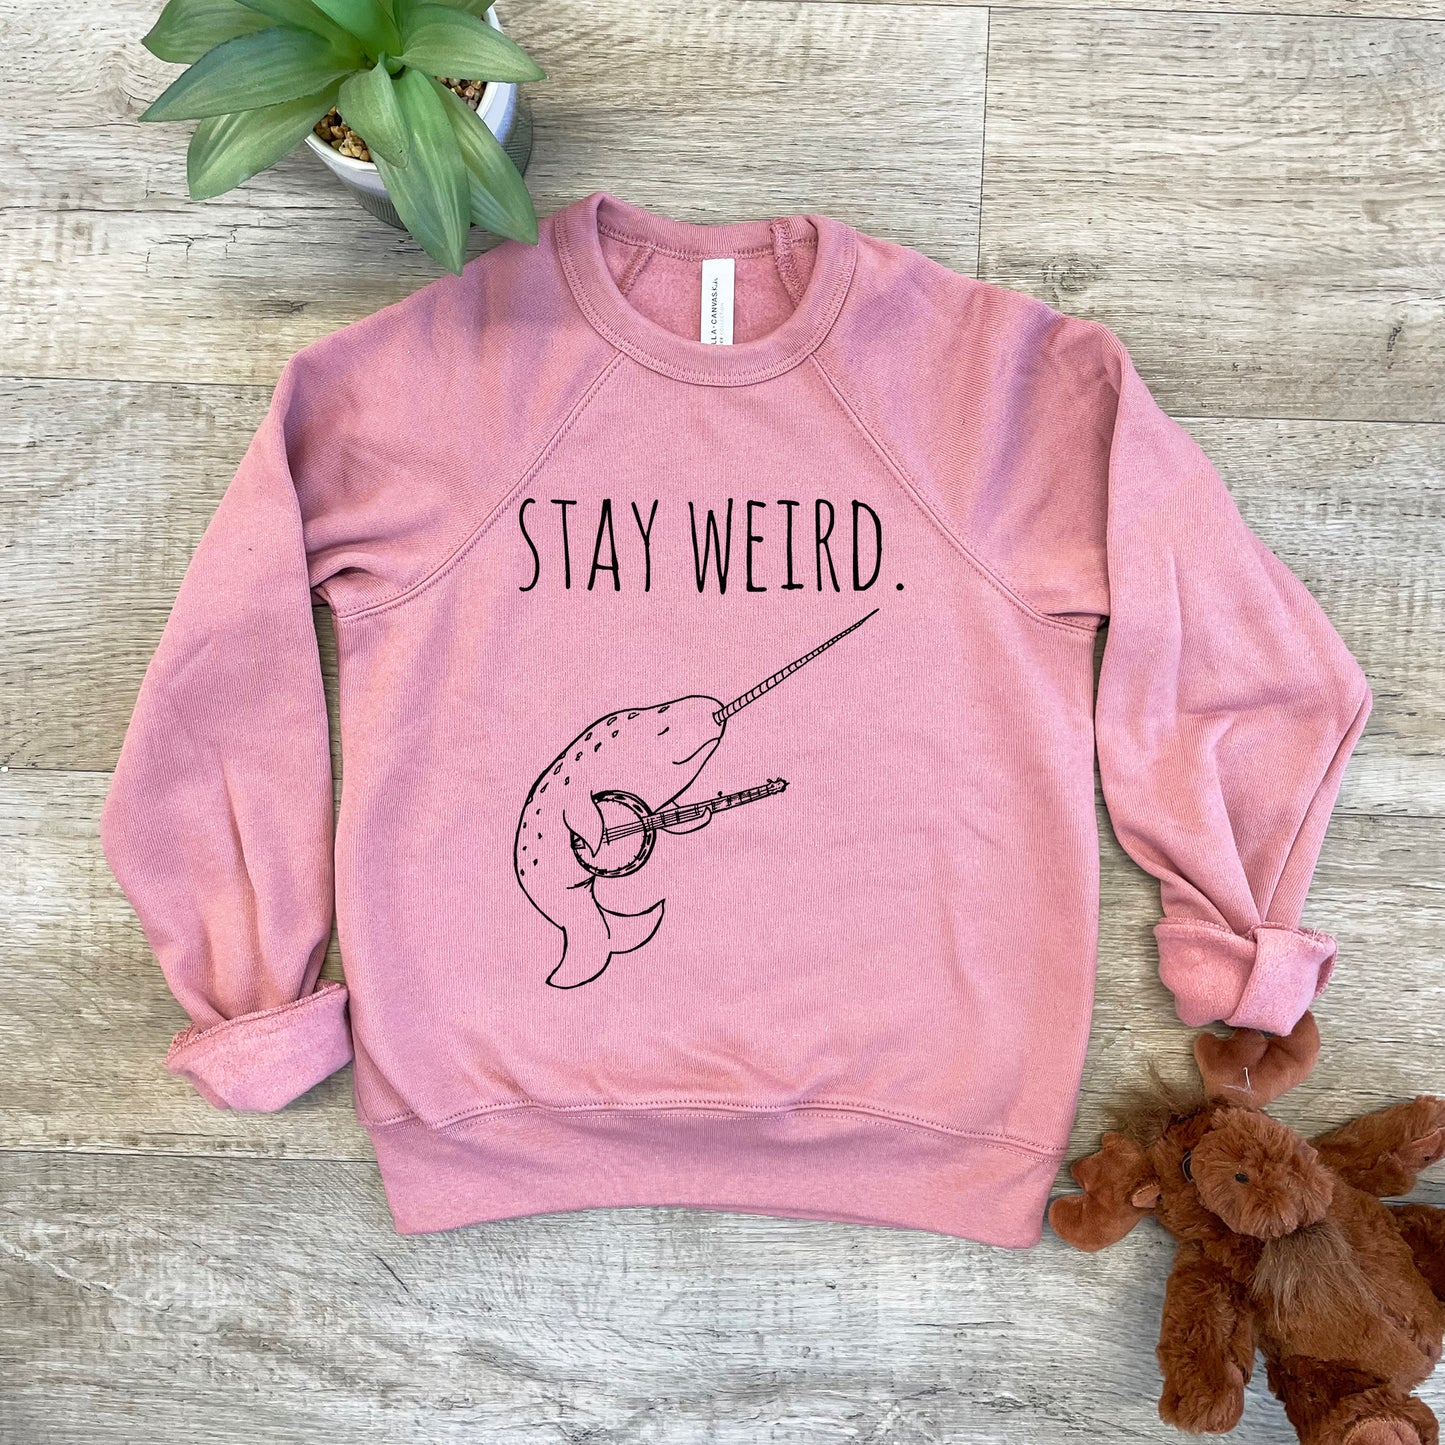 Stay Weird (Narwhal / Banjo) - Kid's Sweatshirt - Heather Gray or Mauve